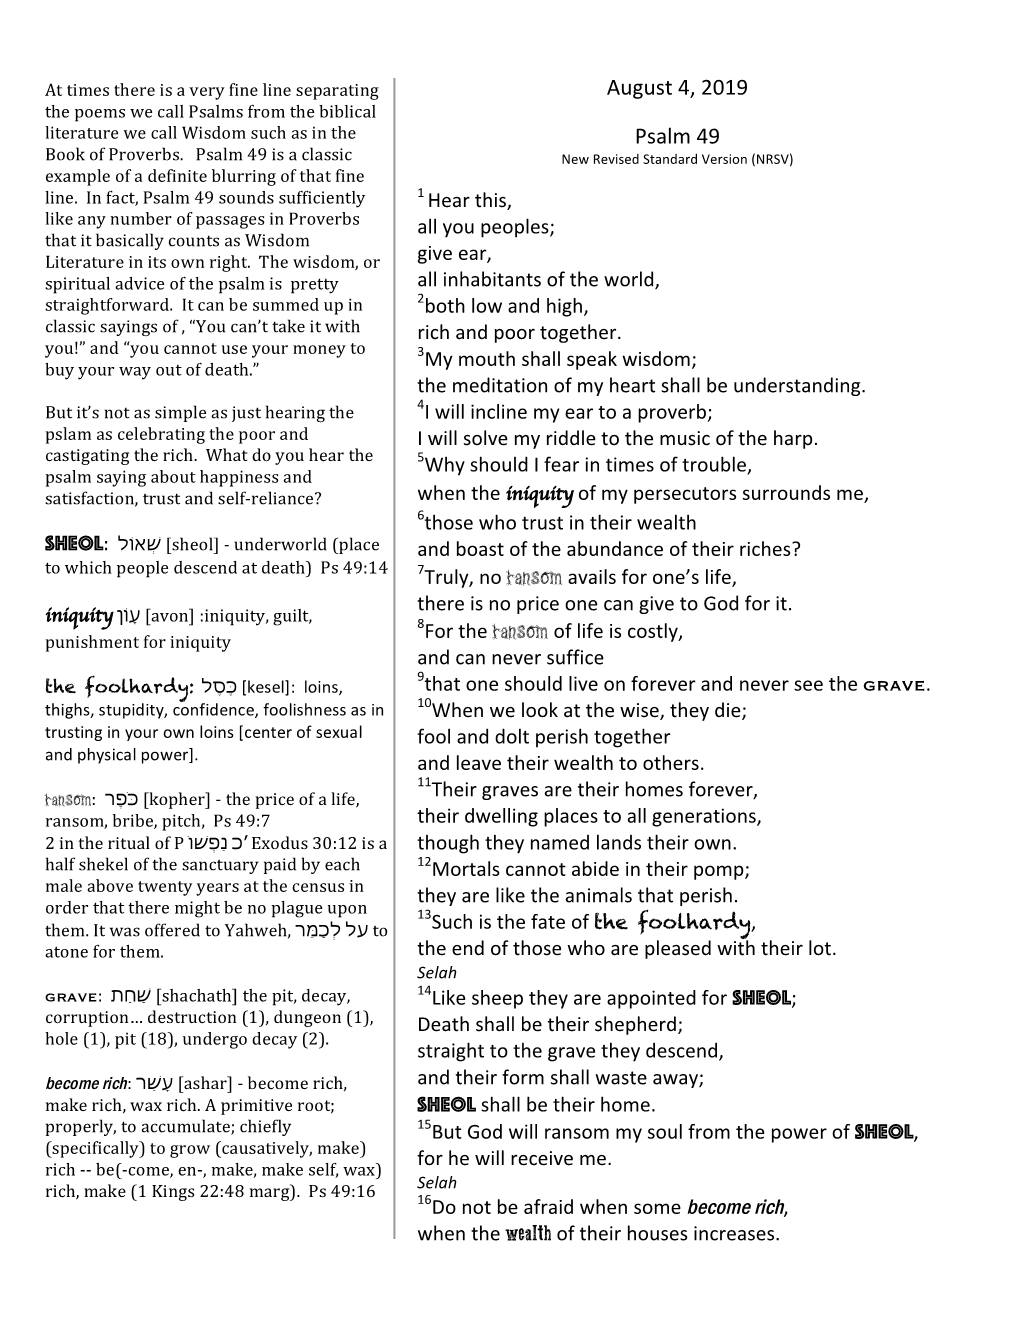 Text Study Sheet Psalm 49 8042019